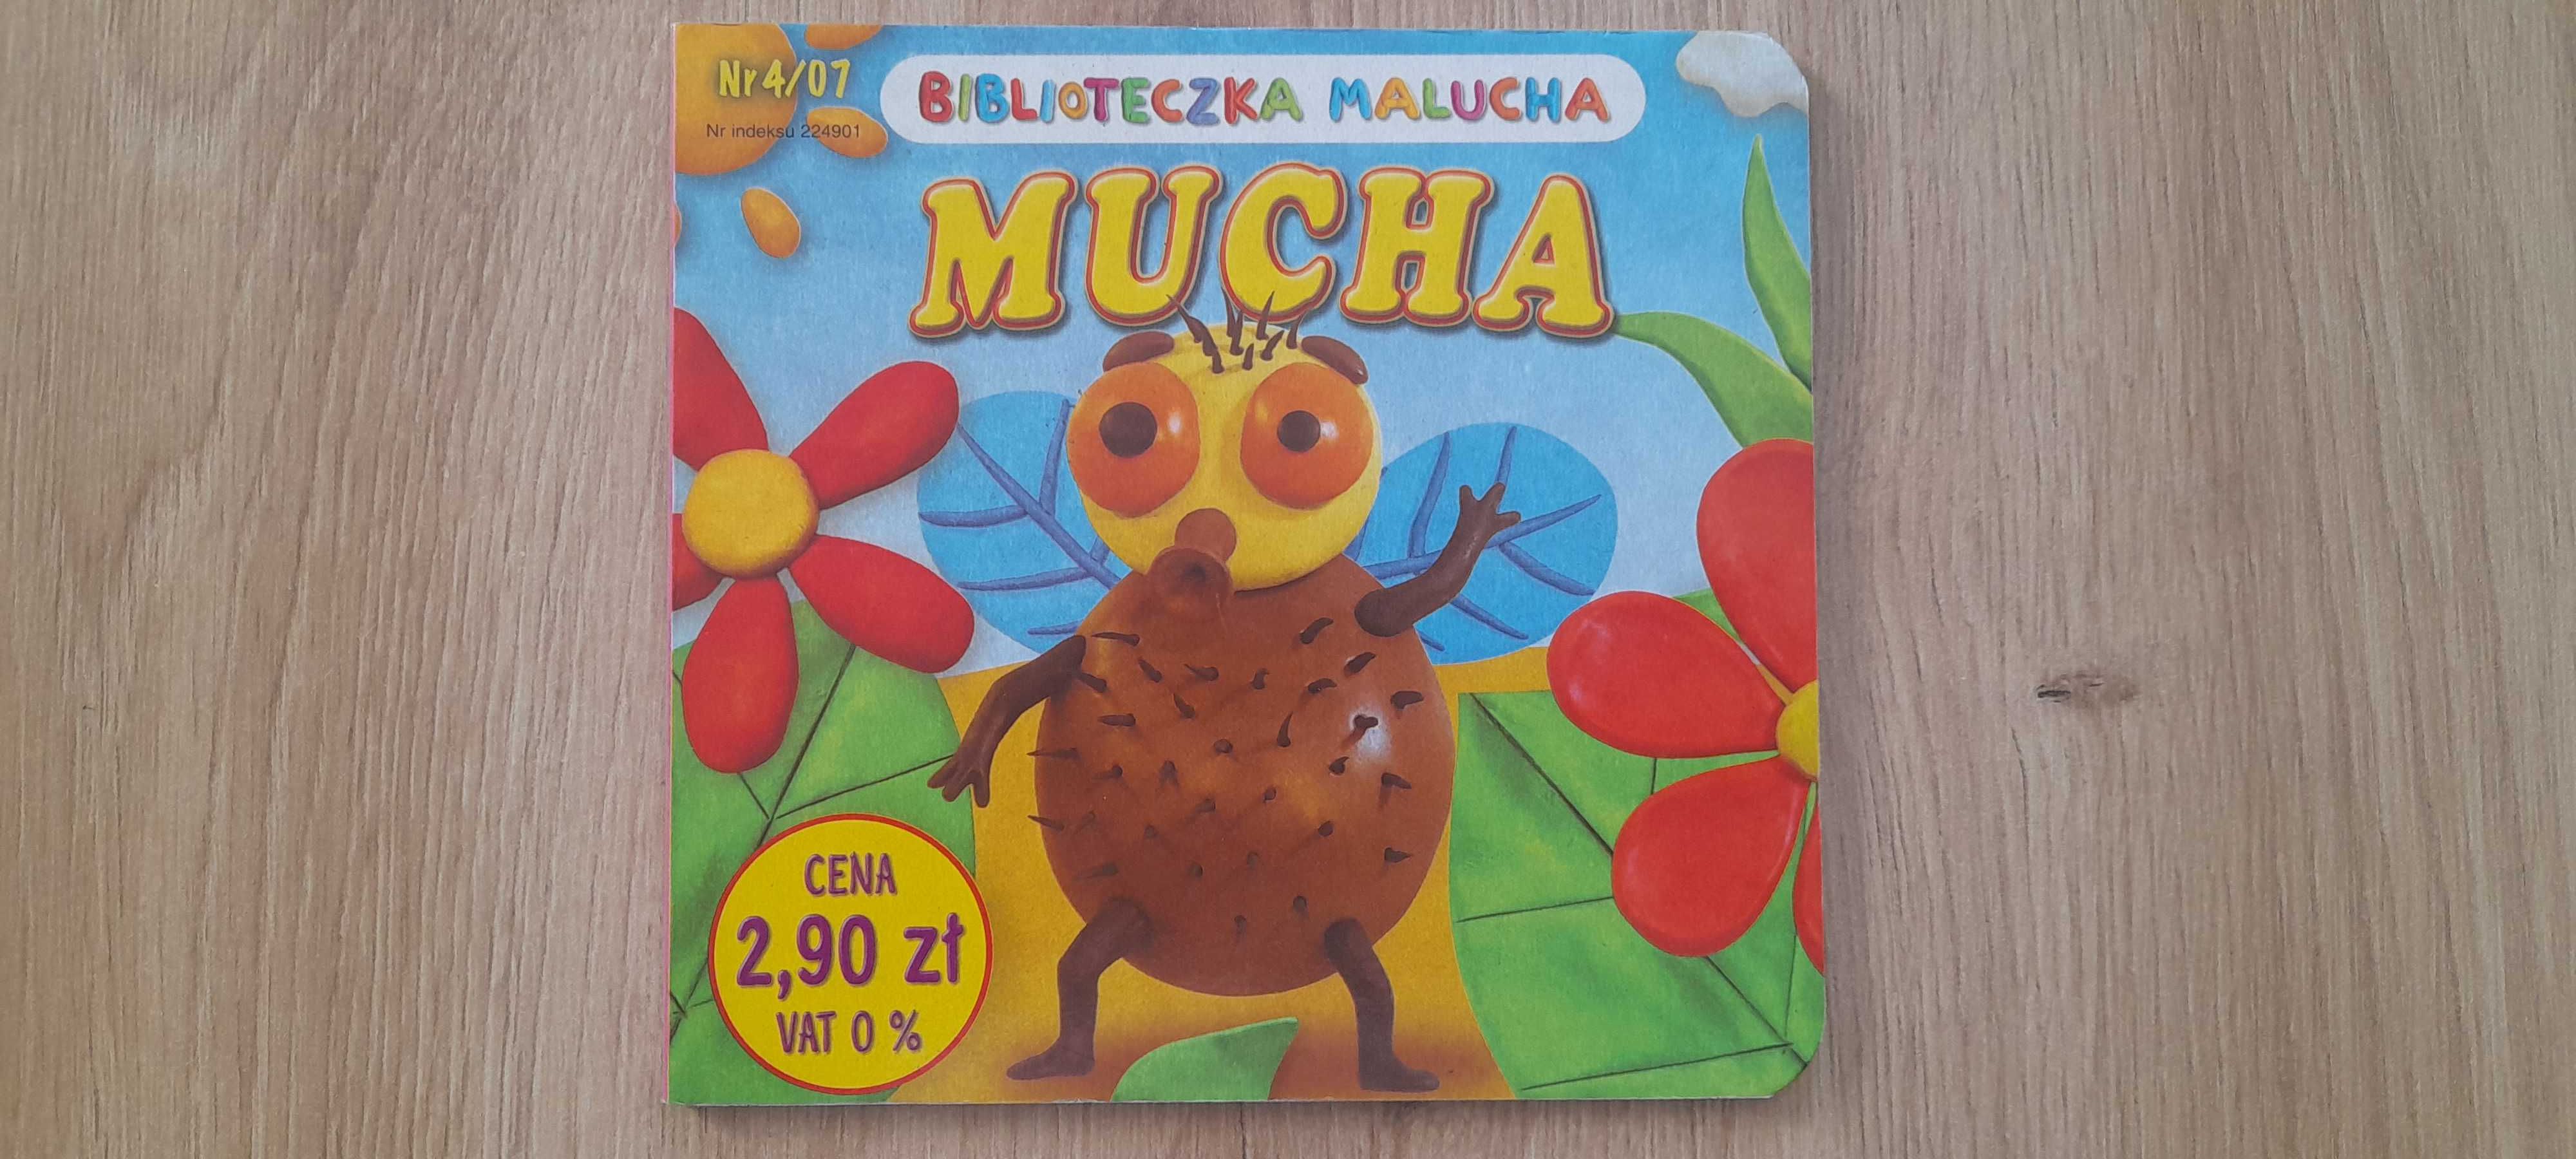 Biblioteczka malucha: "Mucha" - Ewa Sakowska